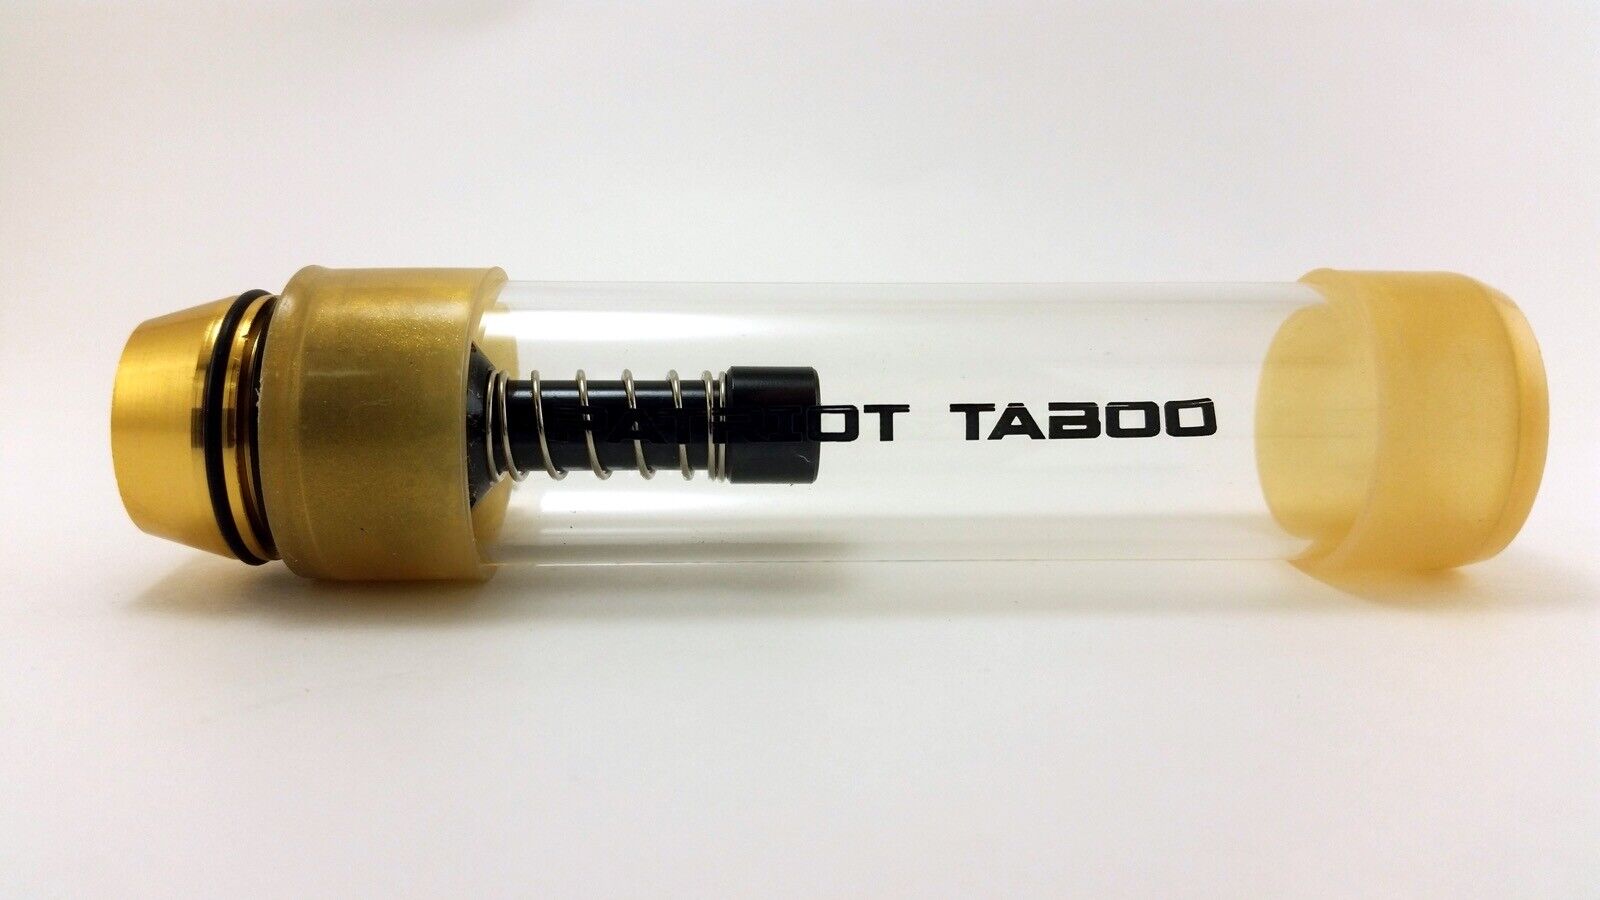 Smoke-It BASIC STEAMROLLER GOLD COLOR Patriot Taboo Reseller, Incredibowl-Alt